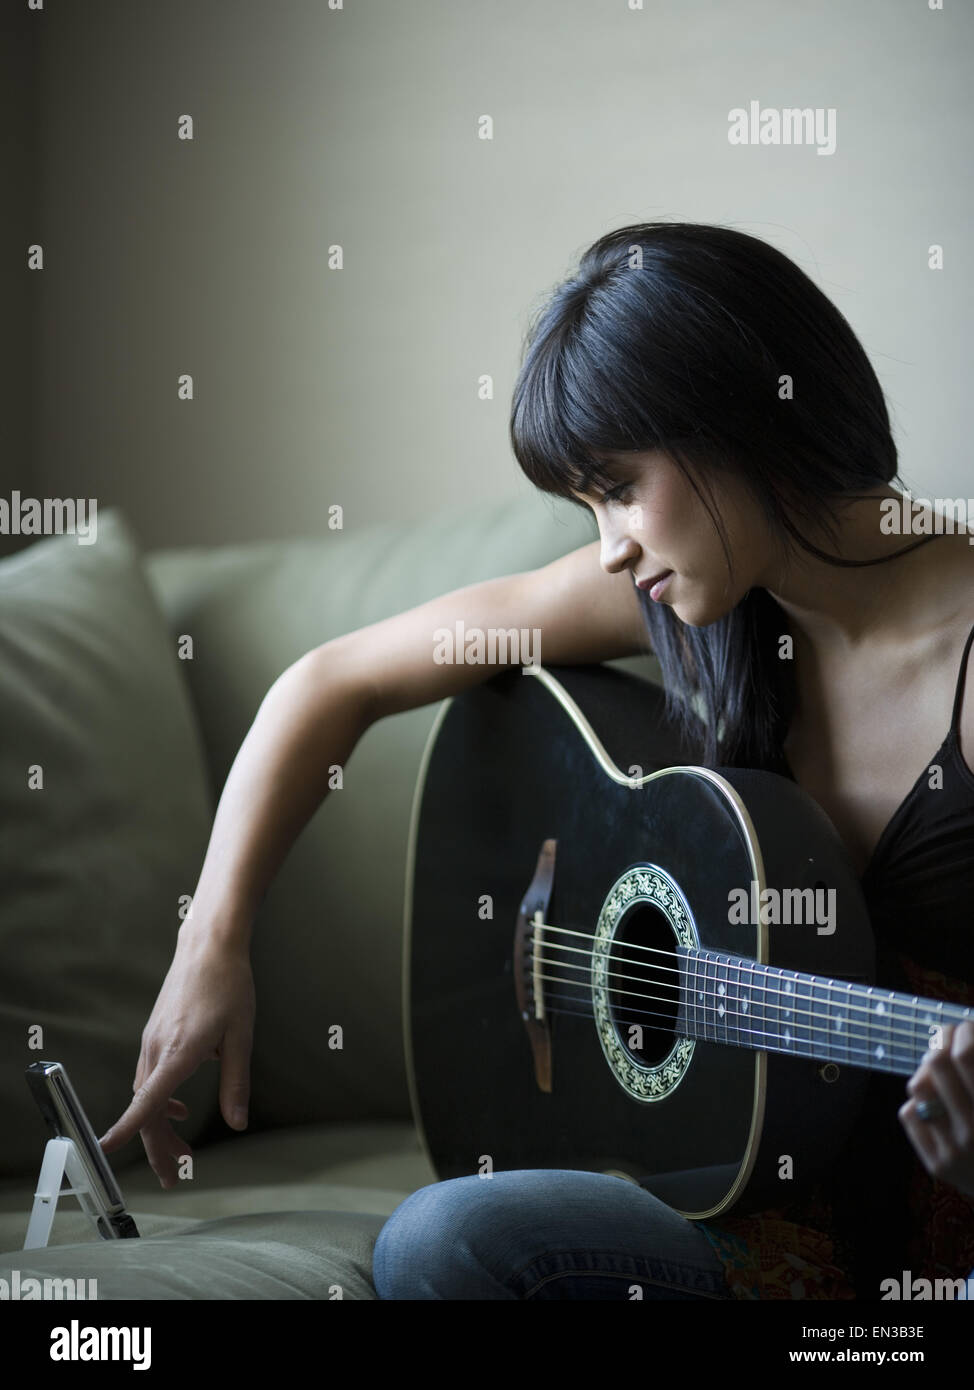 Frau tuning Gitarre mit Metronom Stockfotografie - Alamy